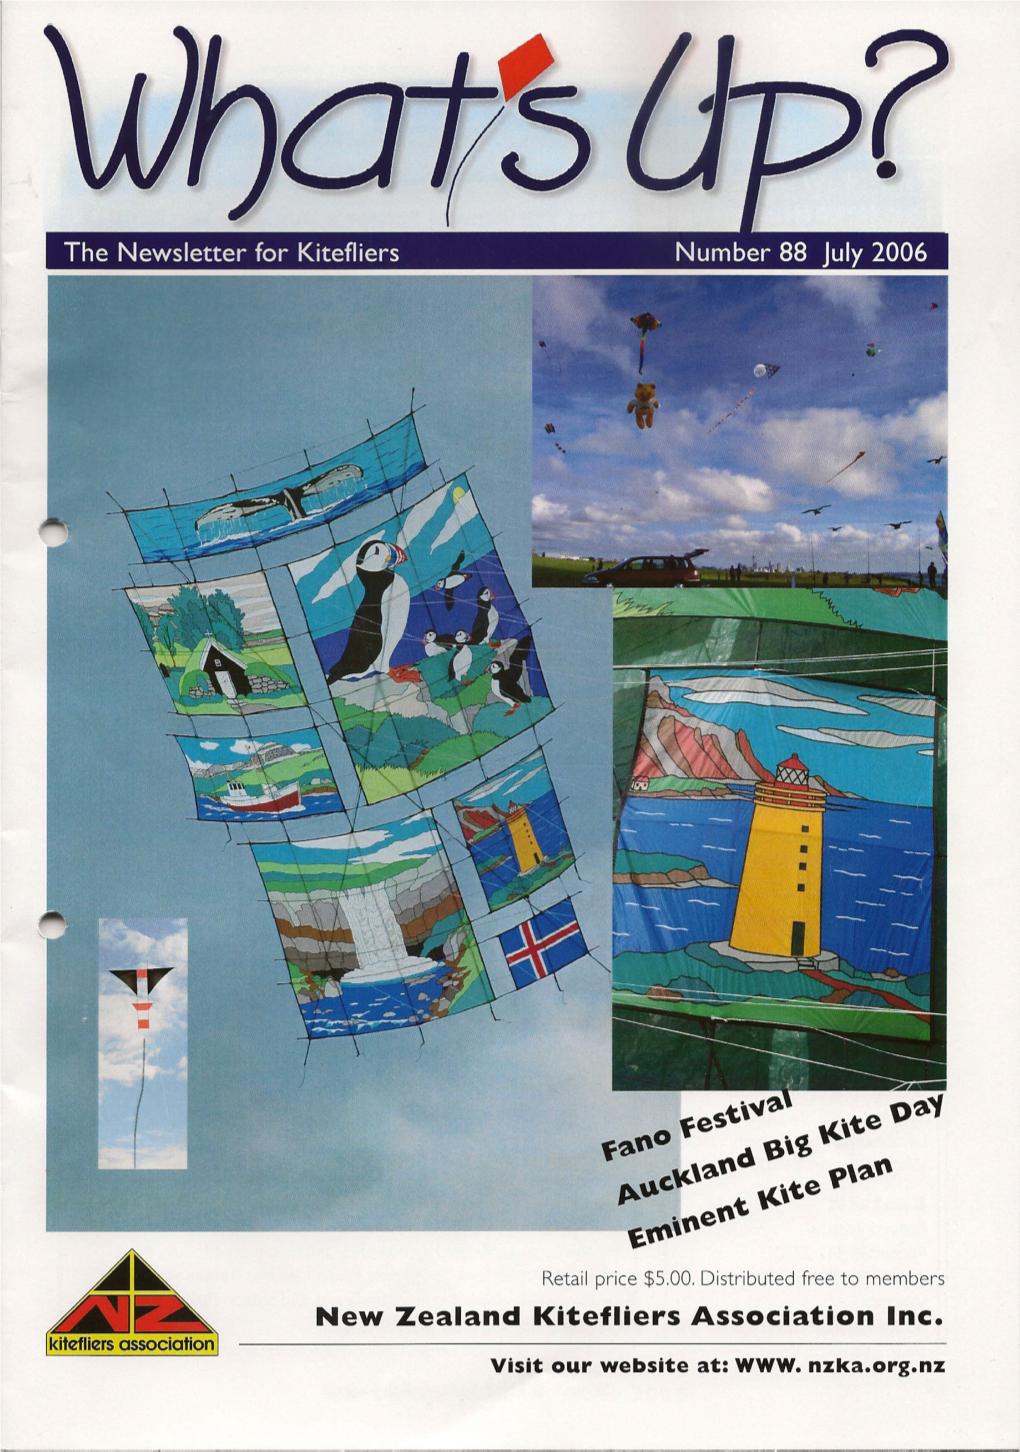 New Zealand Kitefliers Association Inc